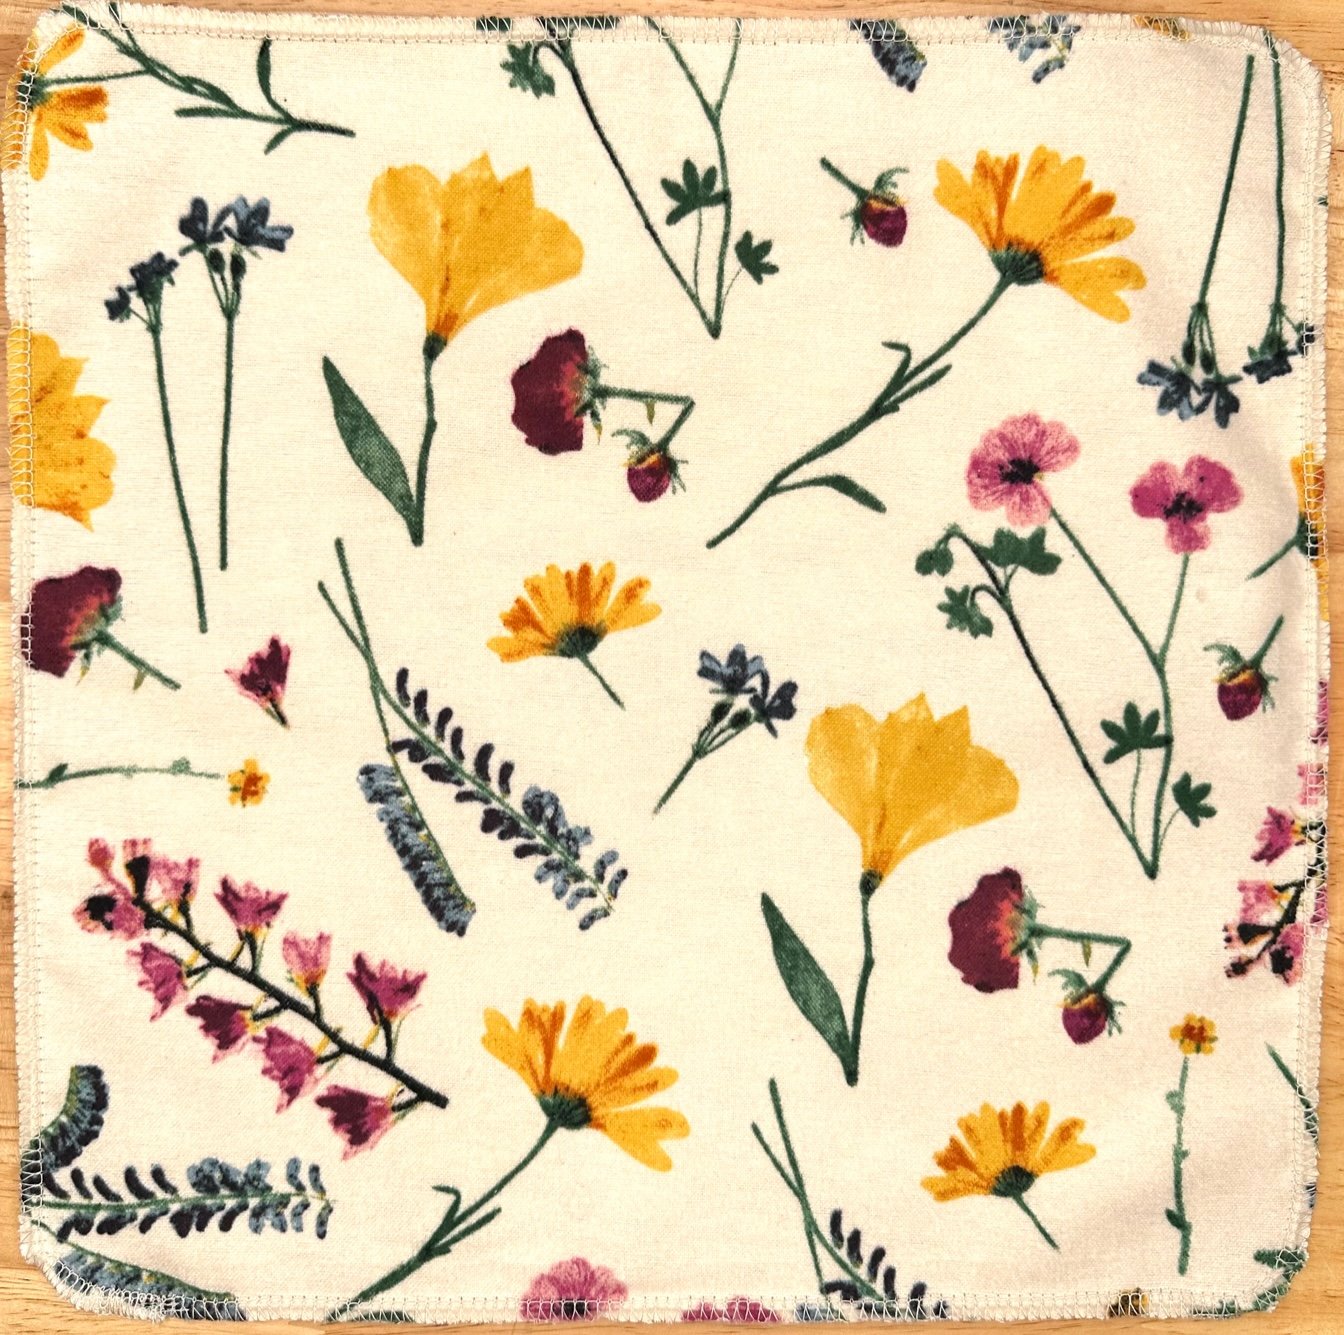 Pressed Flowers Paperless Towels || Spring Unpaper Towels || Zero-Waste Kitchen 12x12